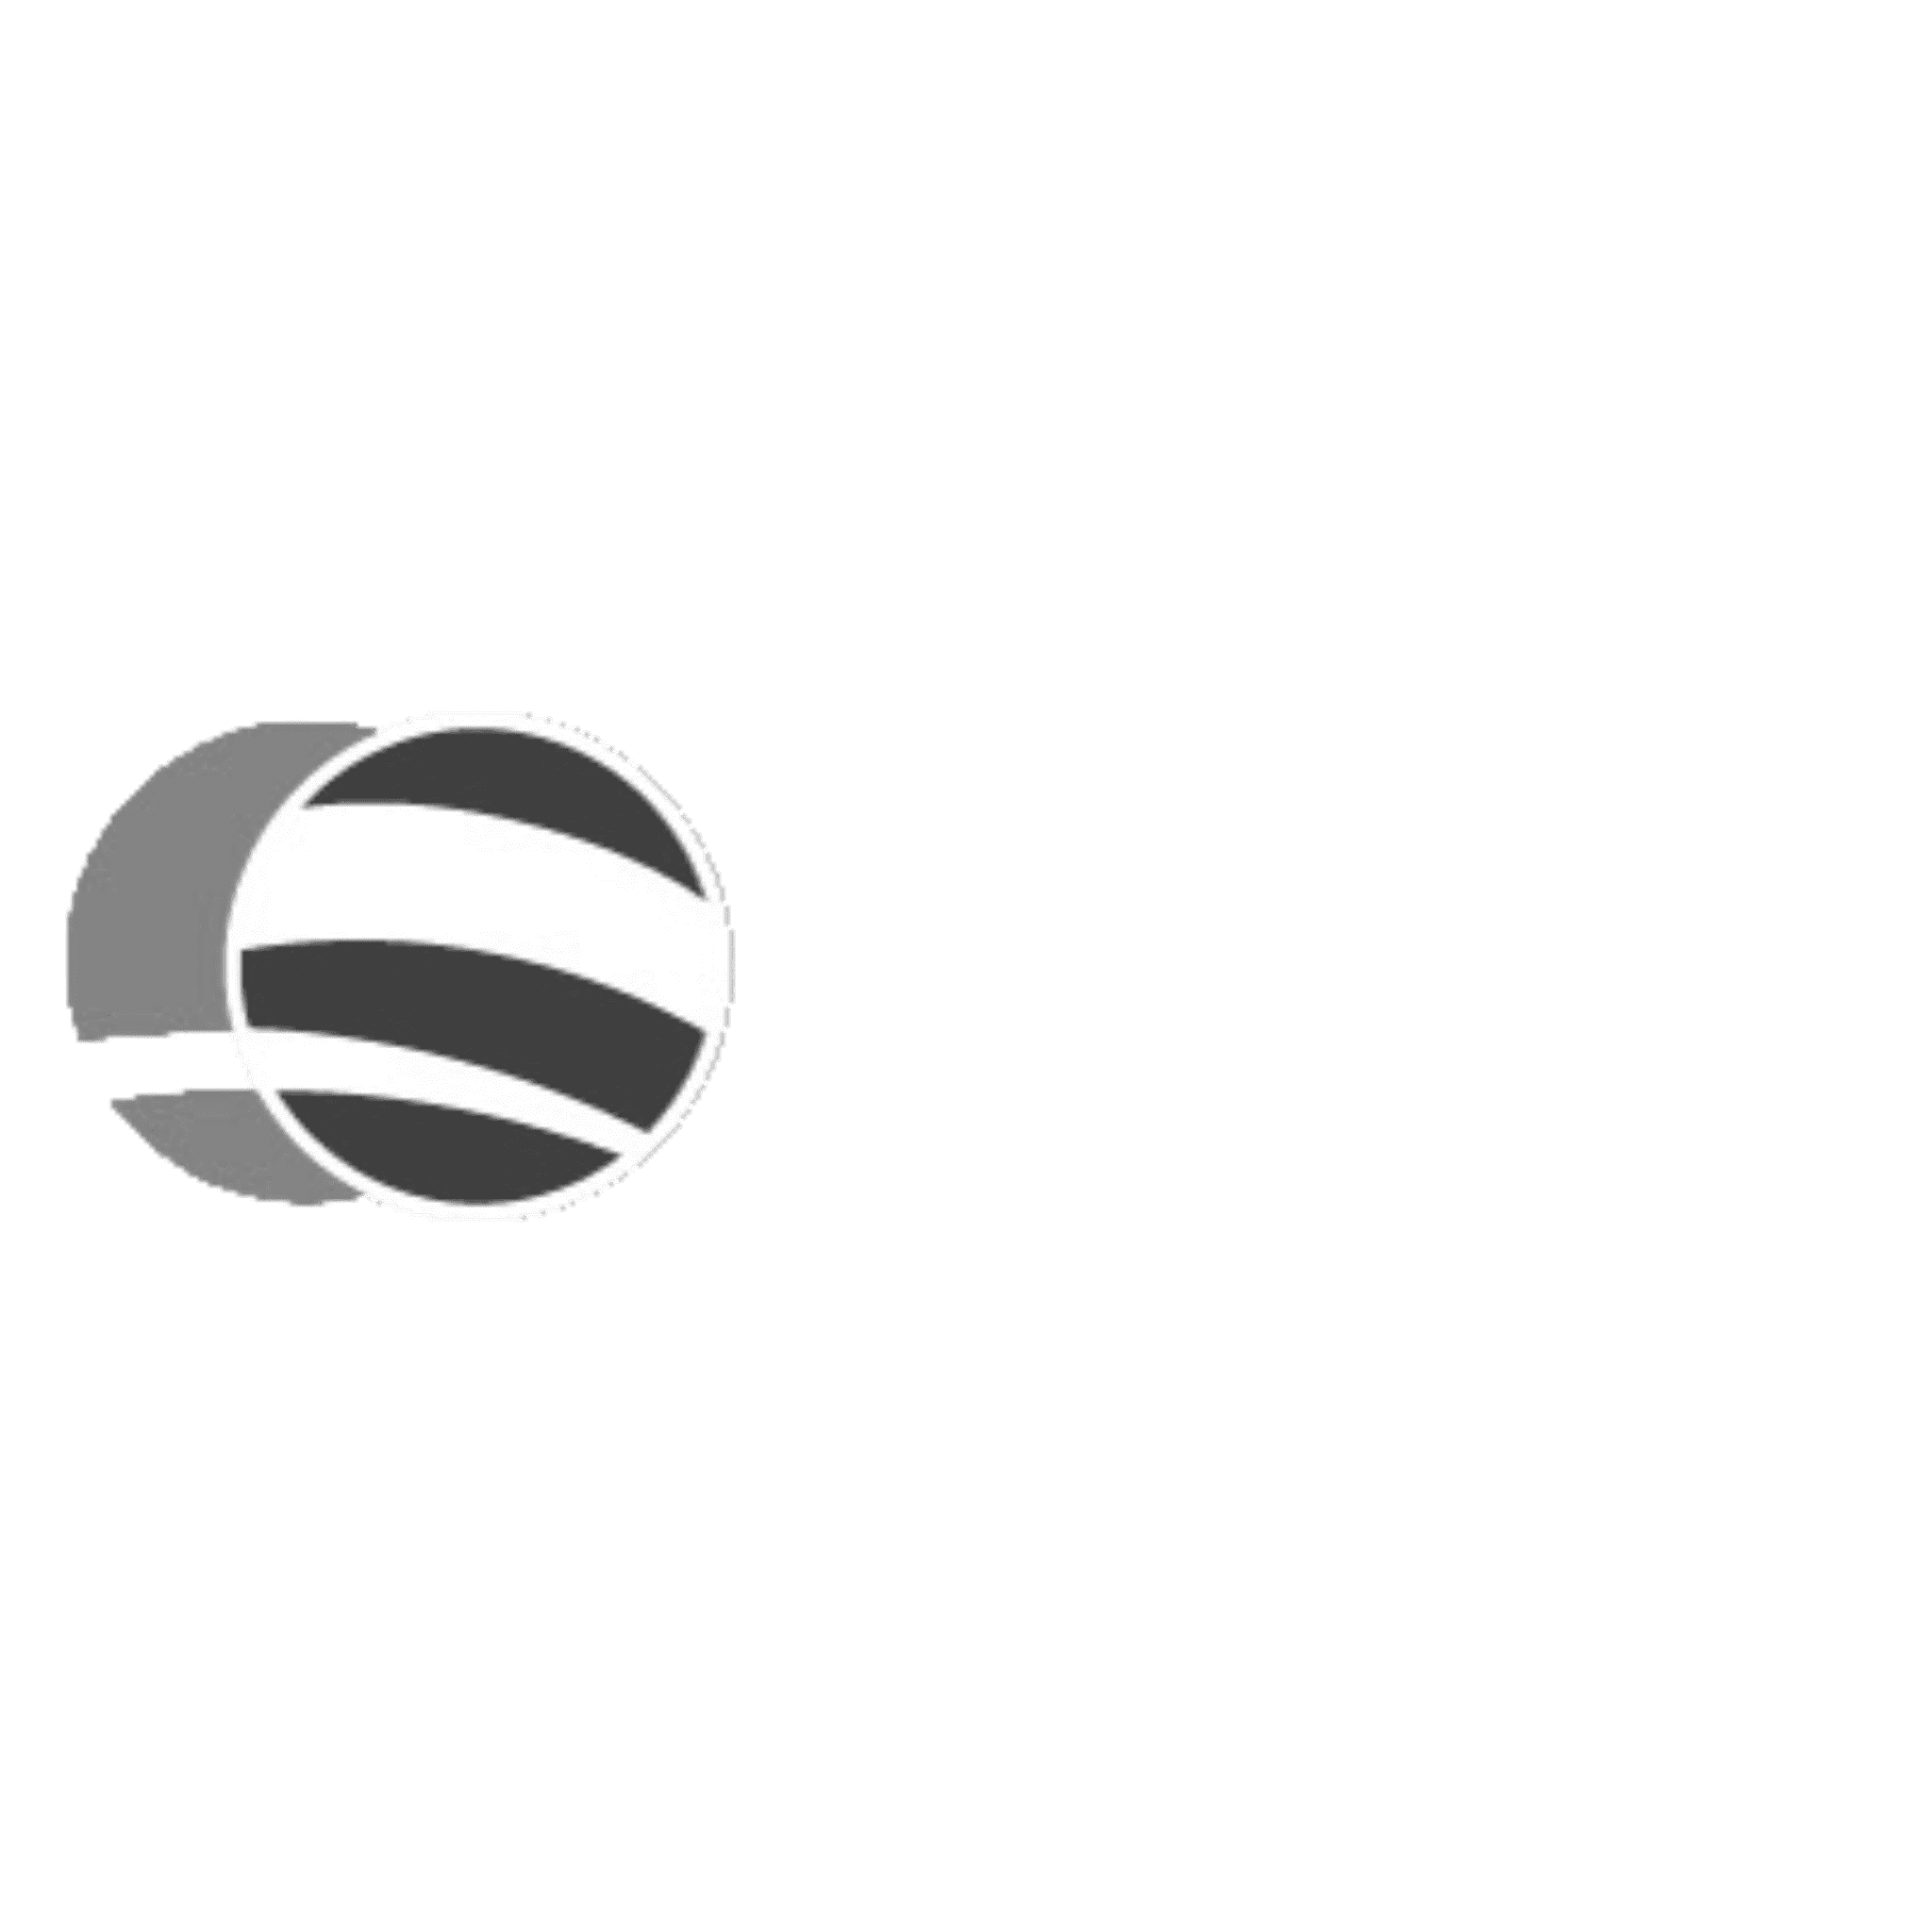 PIER White Grayscale Logo